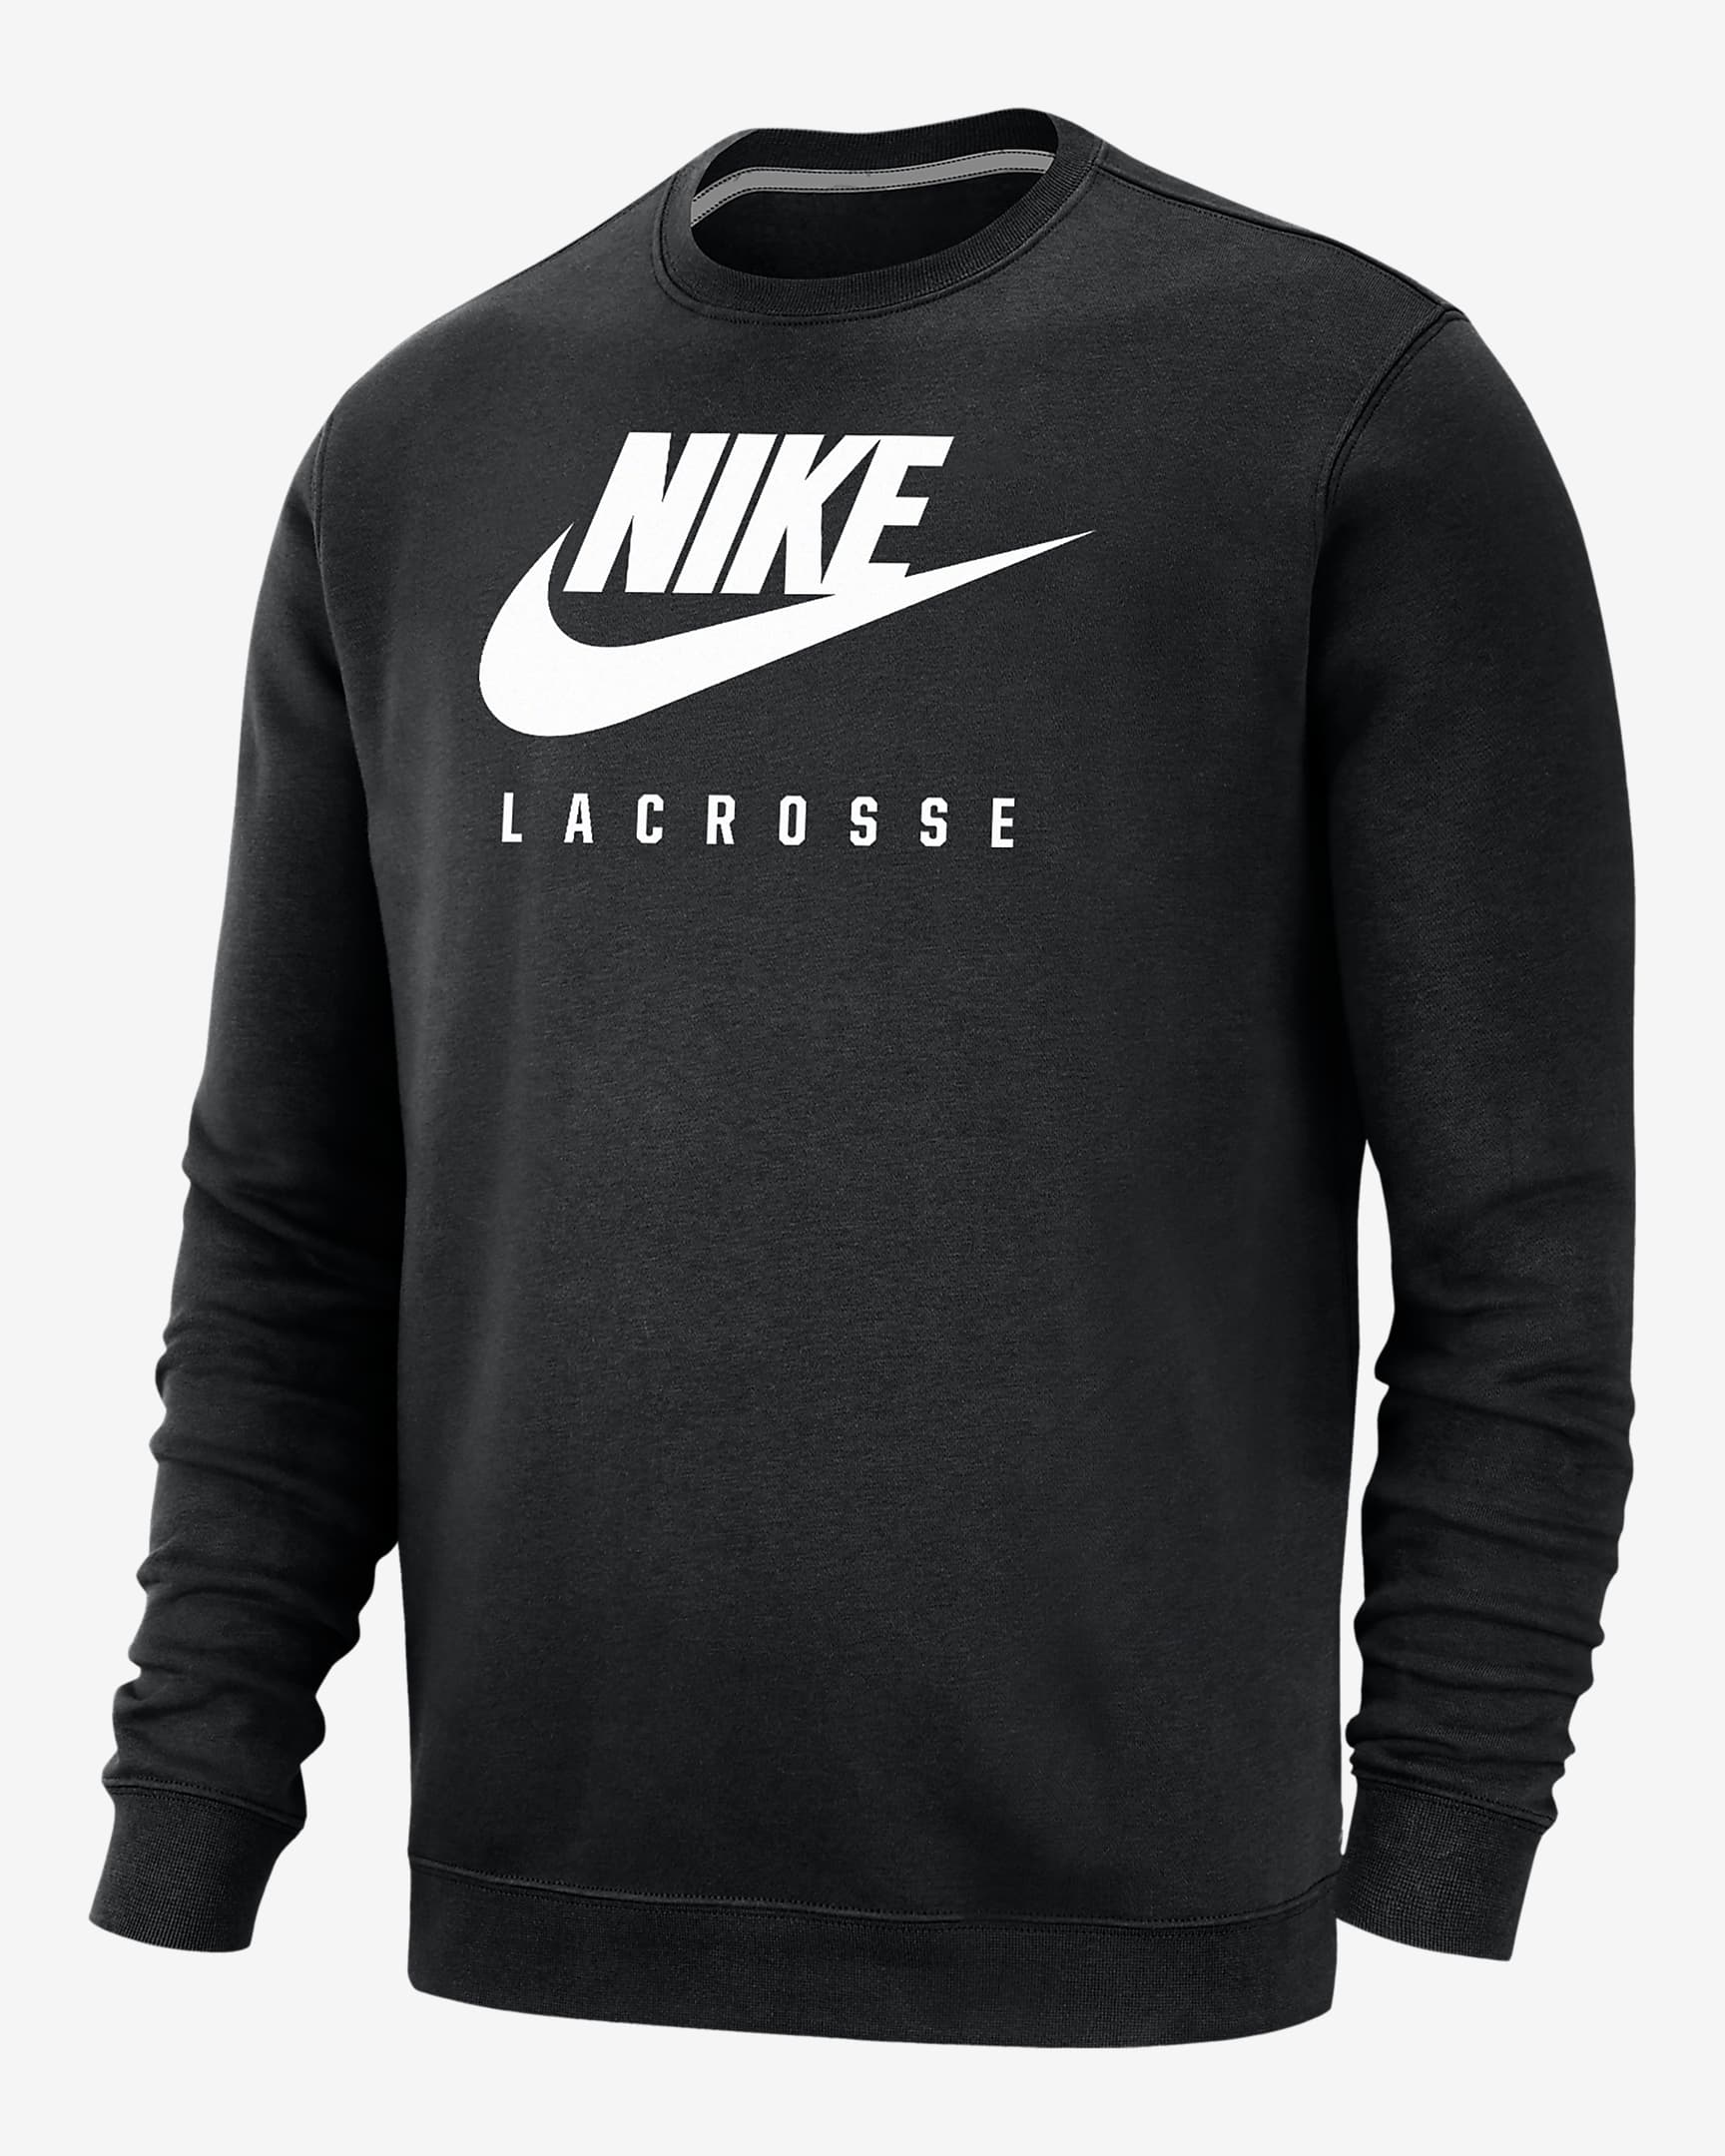 Nike Swoosh Lacrosse Men's Crew-Neck Sweatshirt. Nike.com